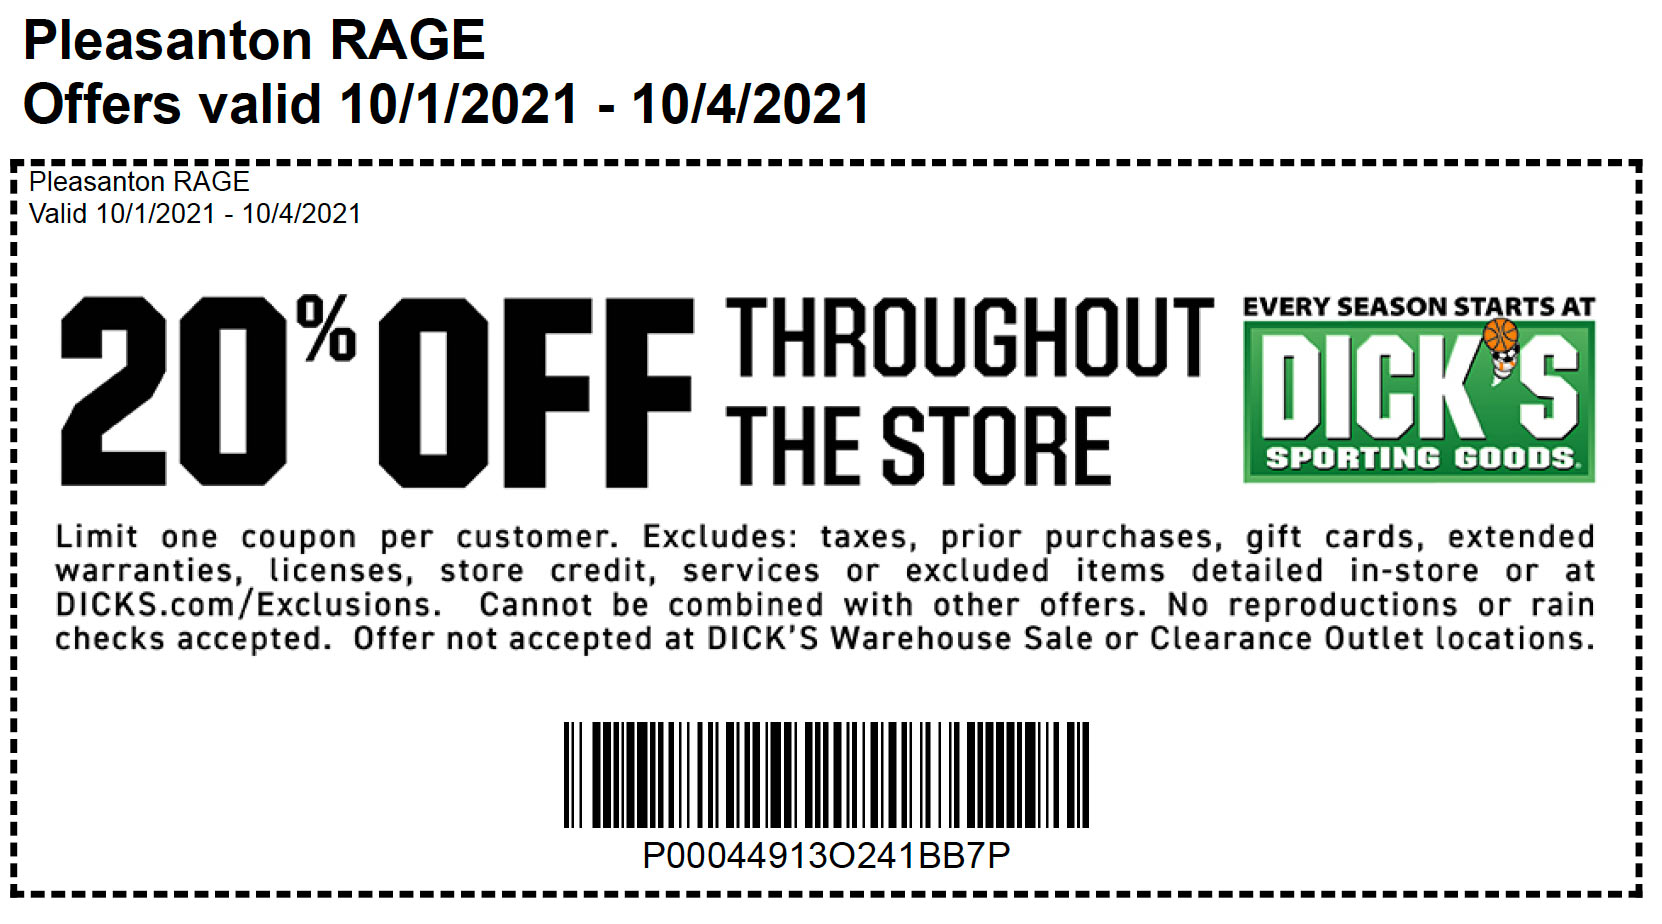 New dicks sporrting goods coupon codes